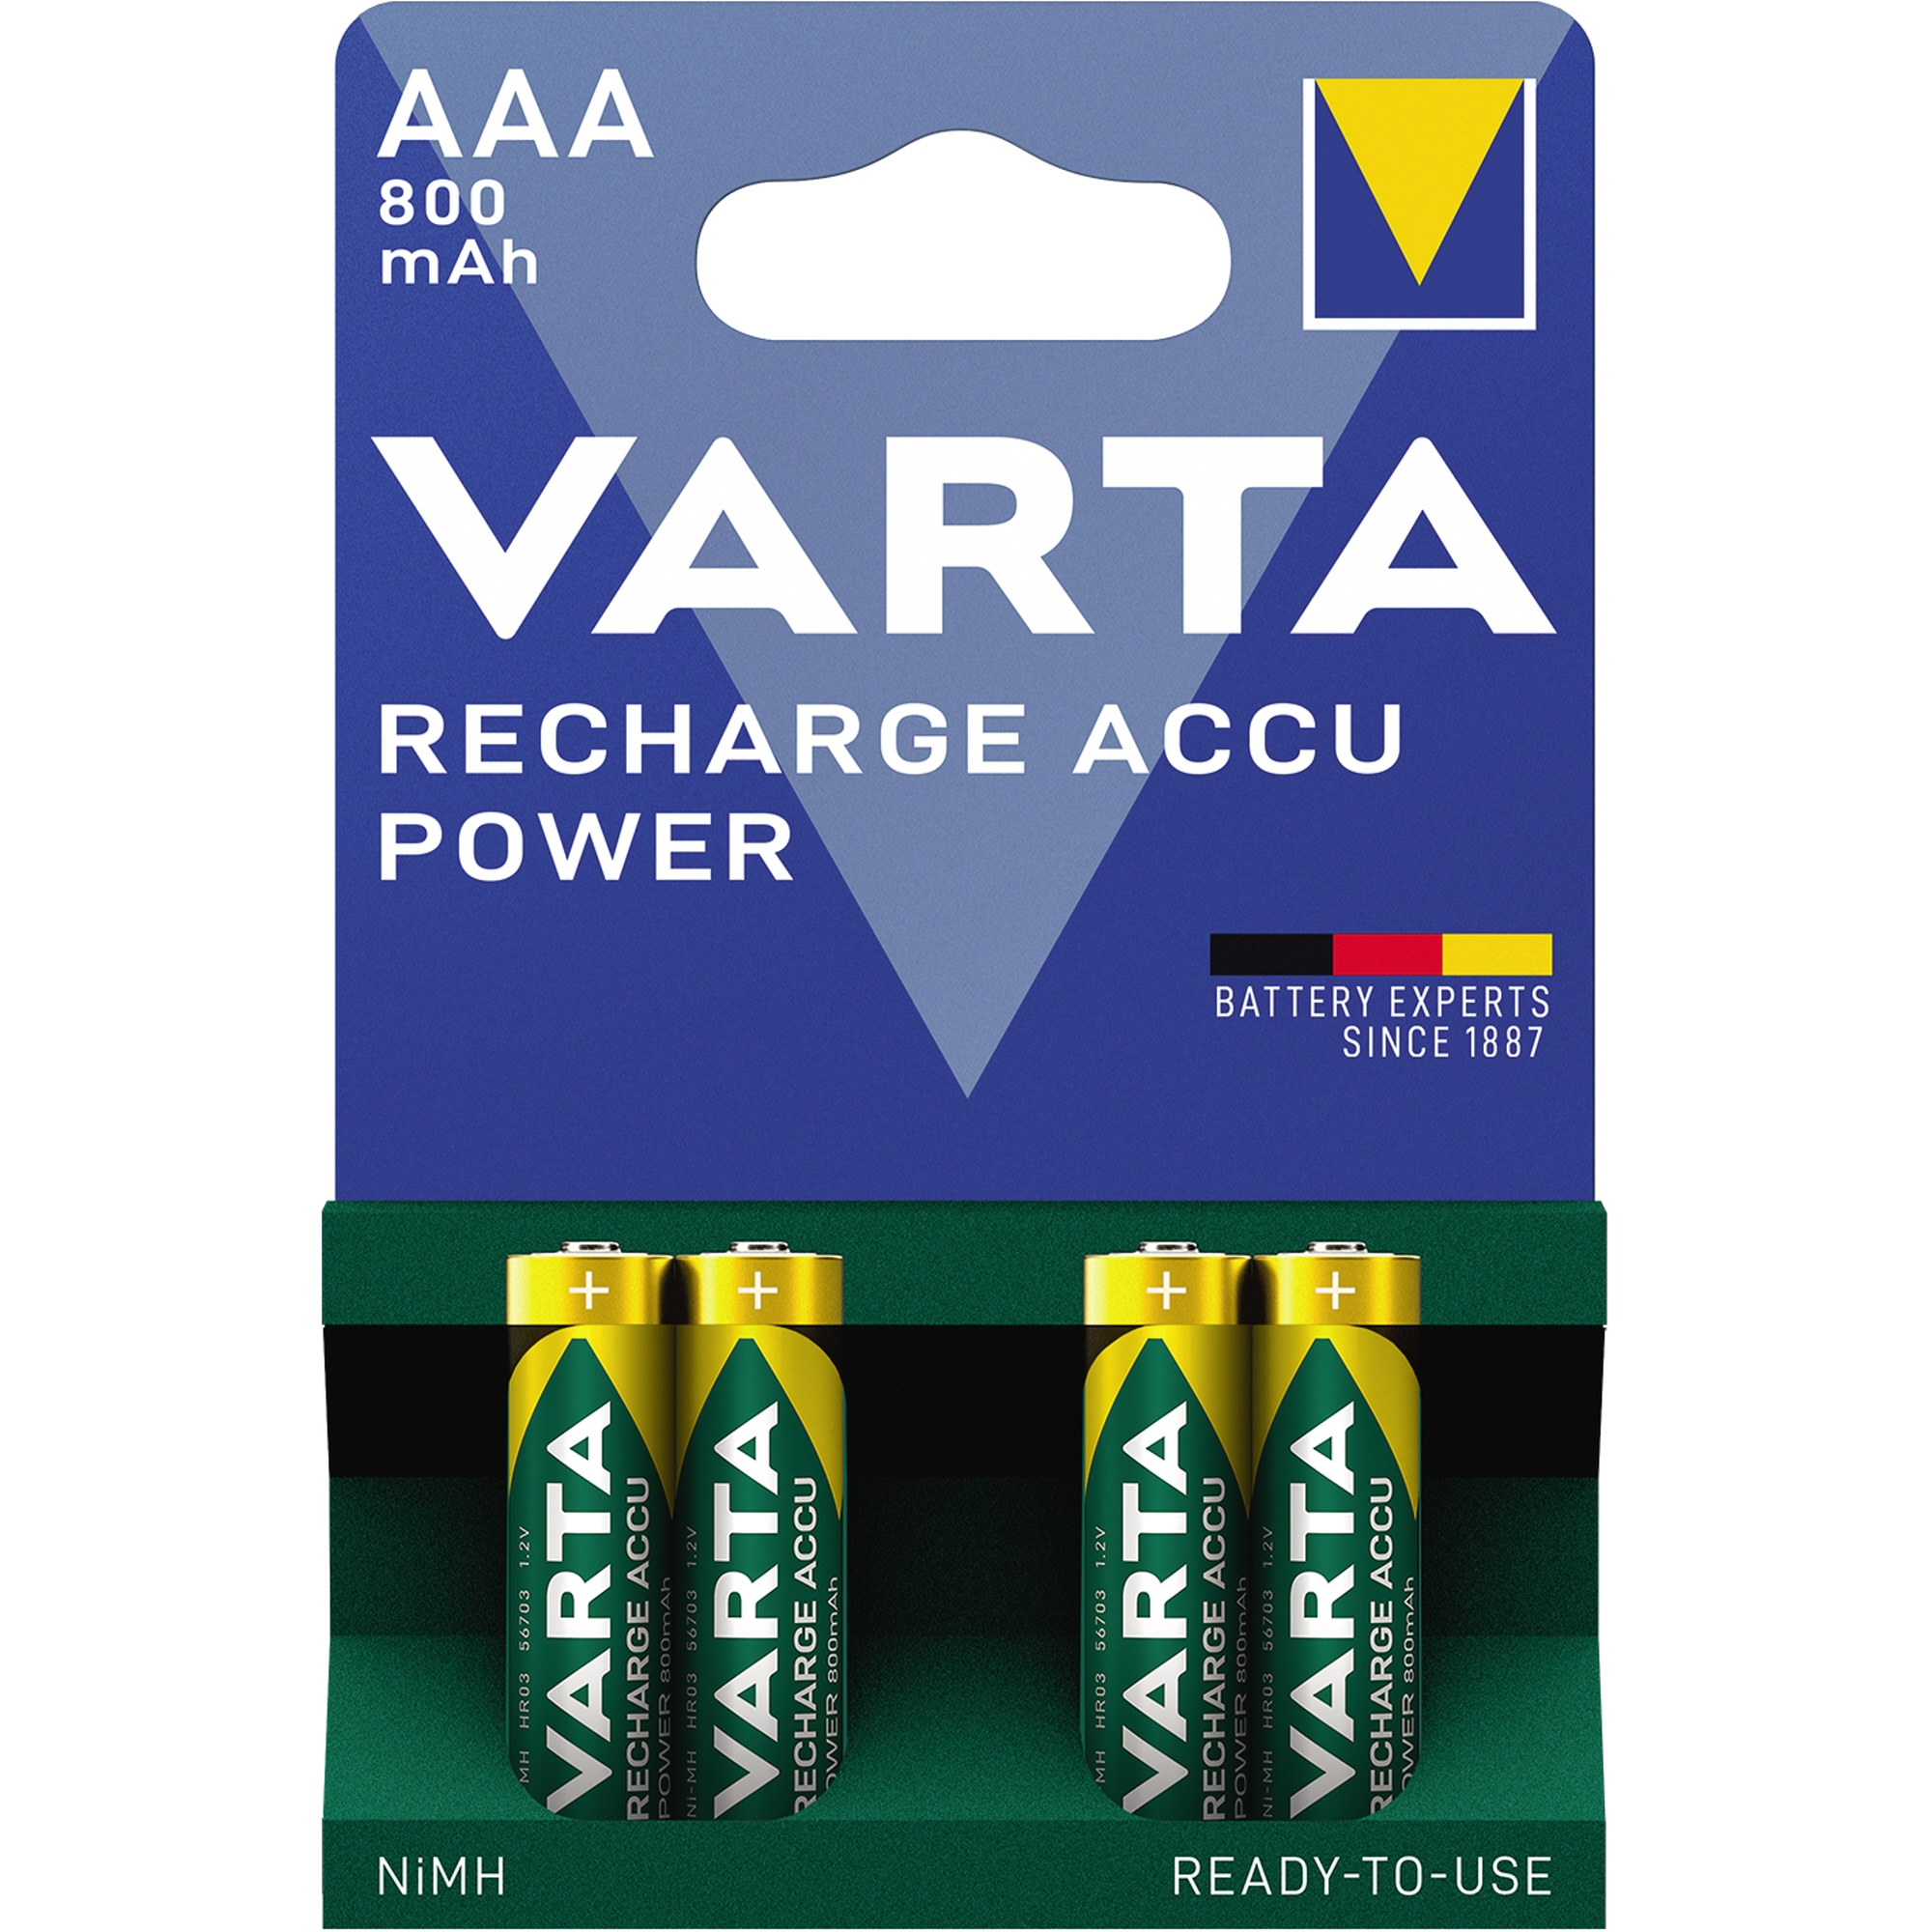 Varta Akku Recharge Accu Power Micro/AAA 800 mAh